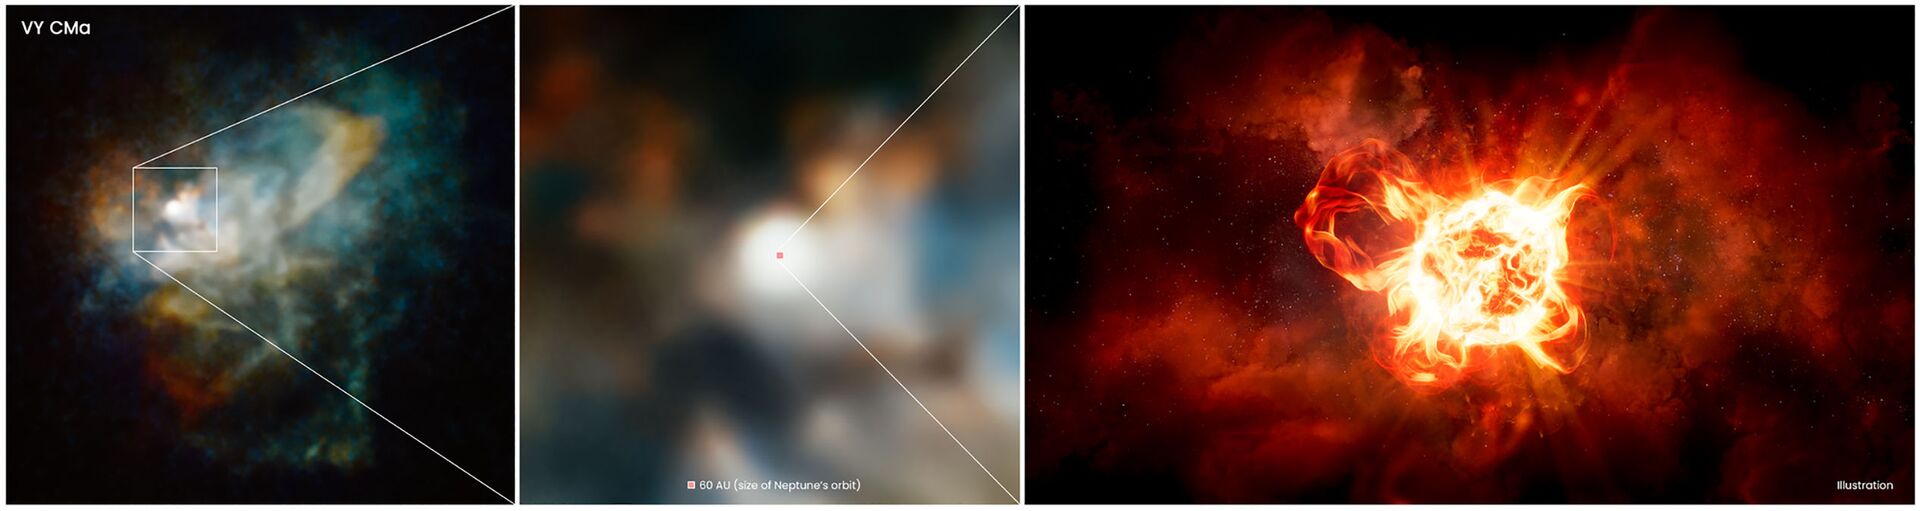 Telescópio Hubble resolve mistério do 'desaparecimento' de estrela hipergigante (FOTO) - Sputnik Brasil, 1920, 05.03.2021